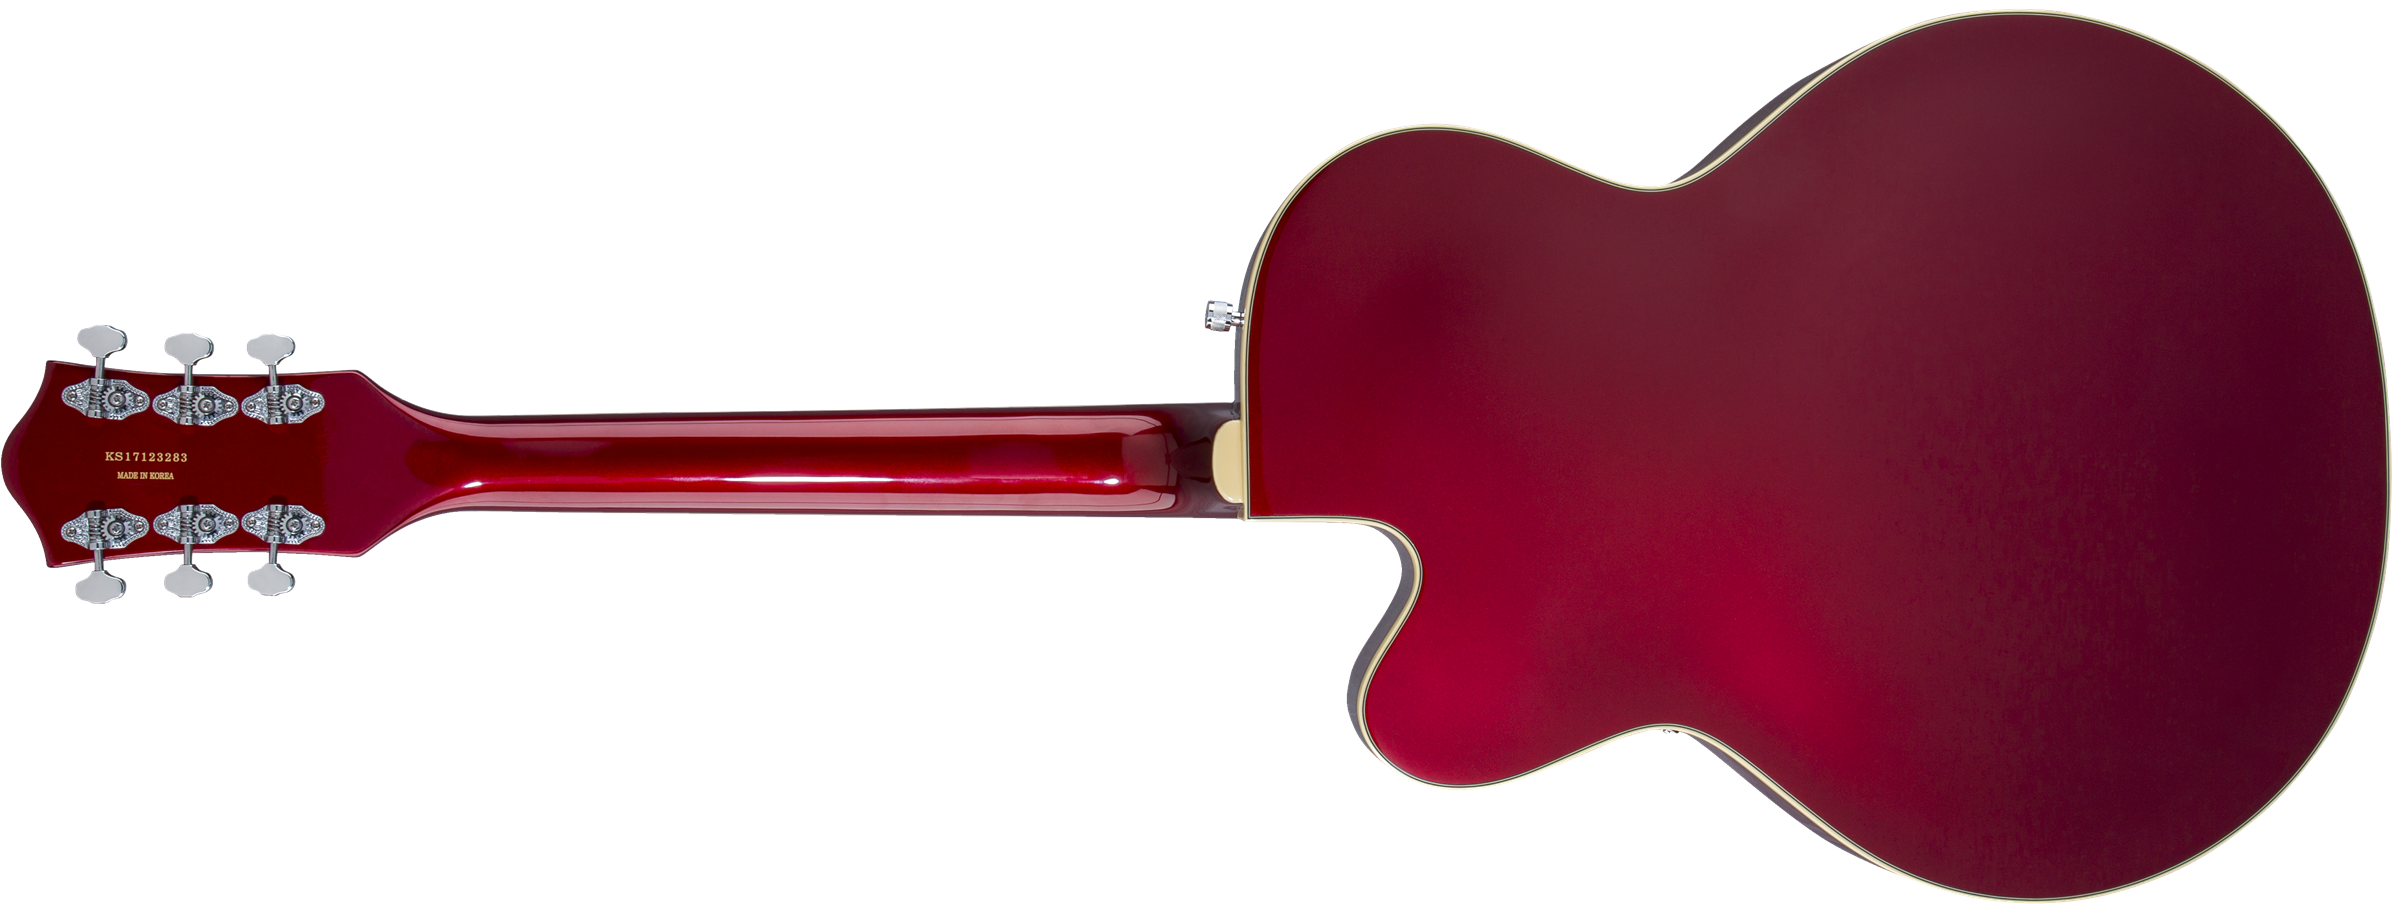 Gretsch G5420t Electromatic Hollow Body 2018 - Candy Apple Red - Semi hollow elektriche gitaar - Variation 1